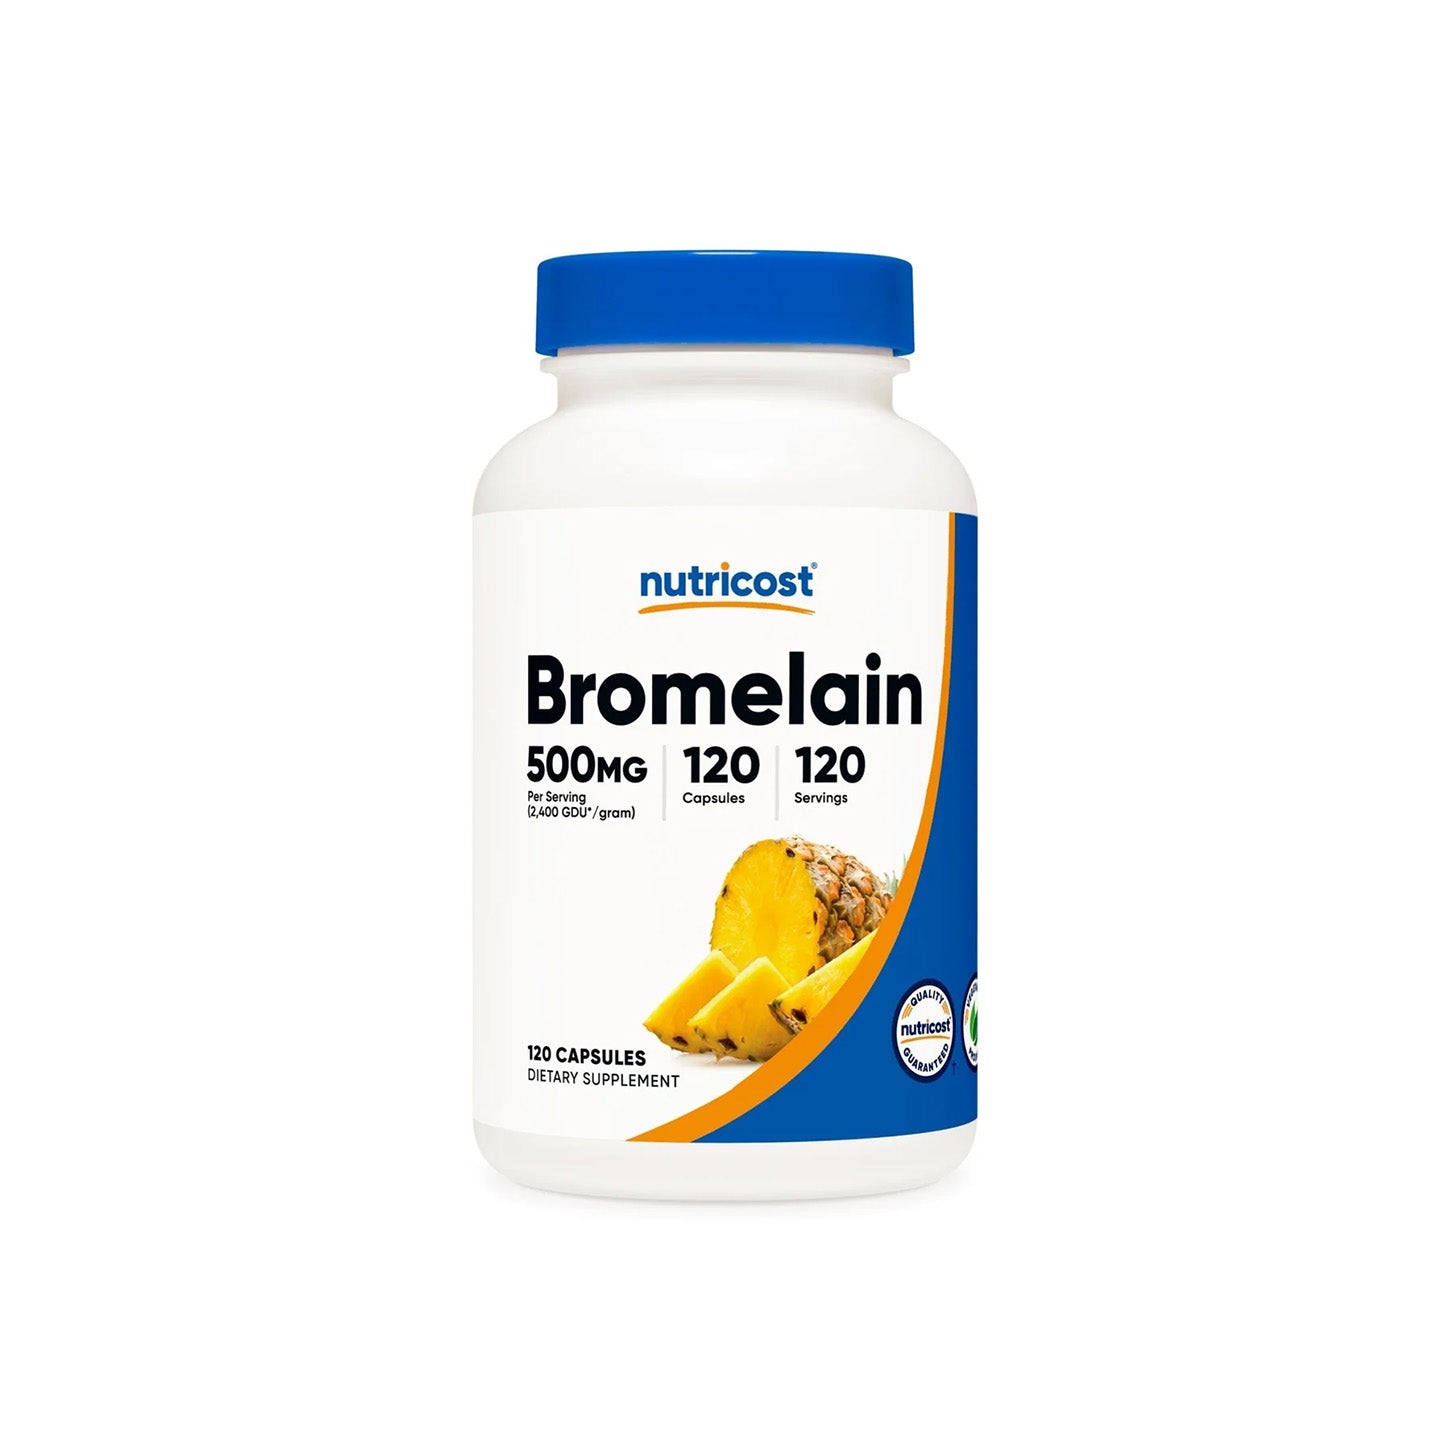 Nutricost Bromelain: Soporte Digestivo y Antiinflamatorio Natural | ProHealth Shop [Panamá]